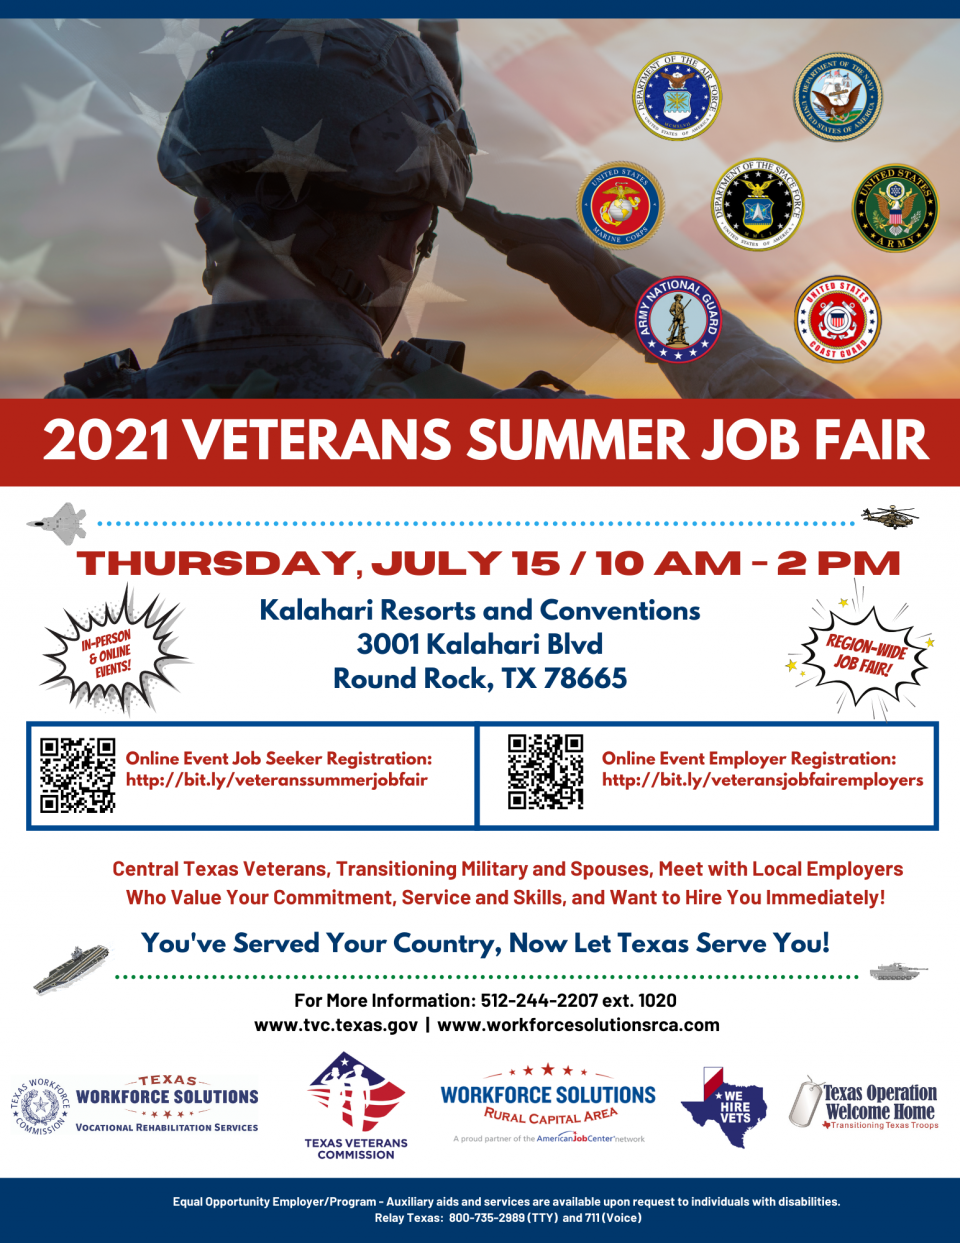 2021 Veterans Summer Job Fair to Be Held at Kalahari Resorts Texas & Online